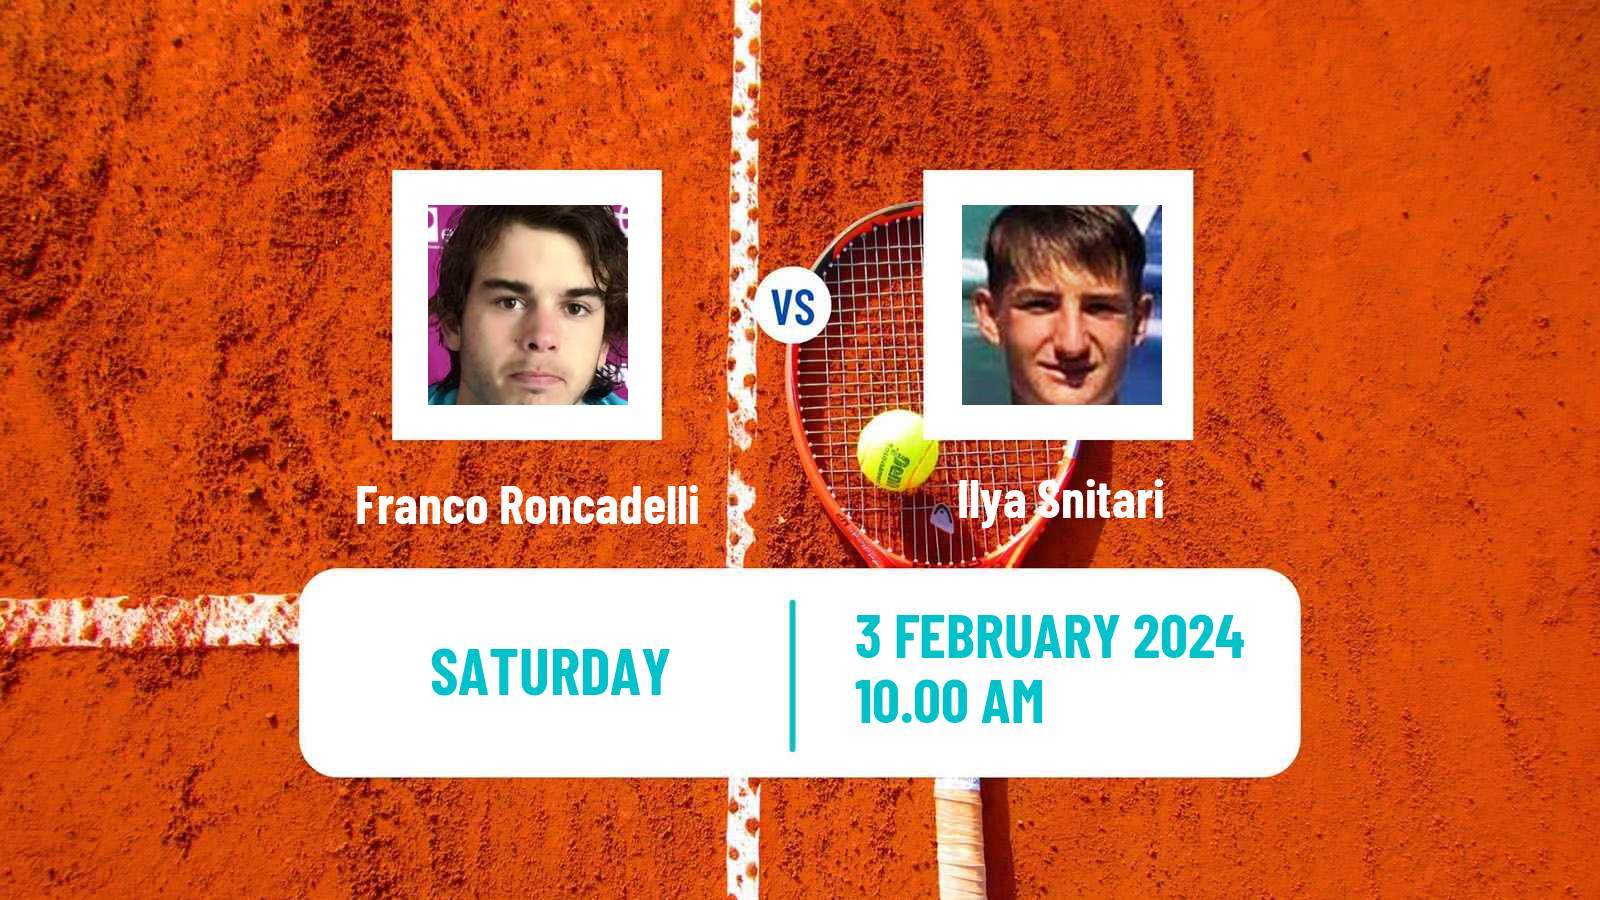 Tennis Davis Cup World Group II Franco Roncadelli - Ilya Snitari